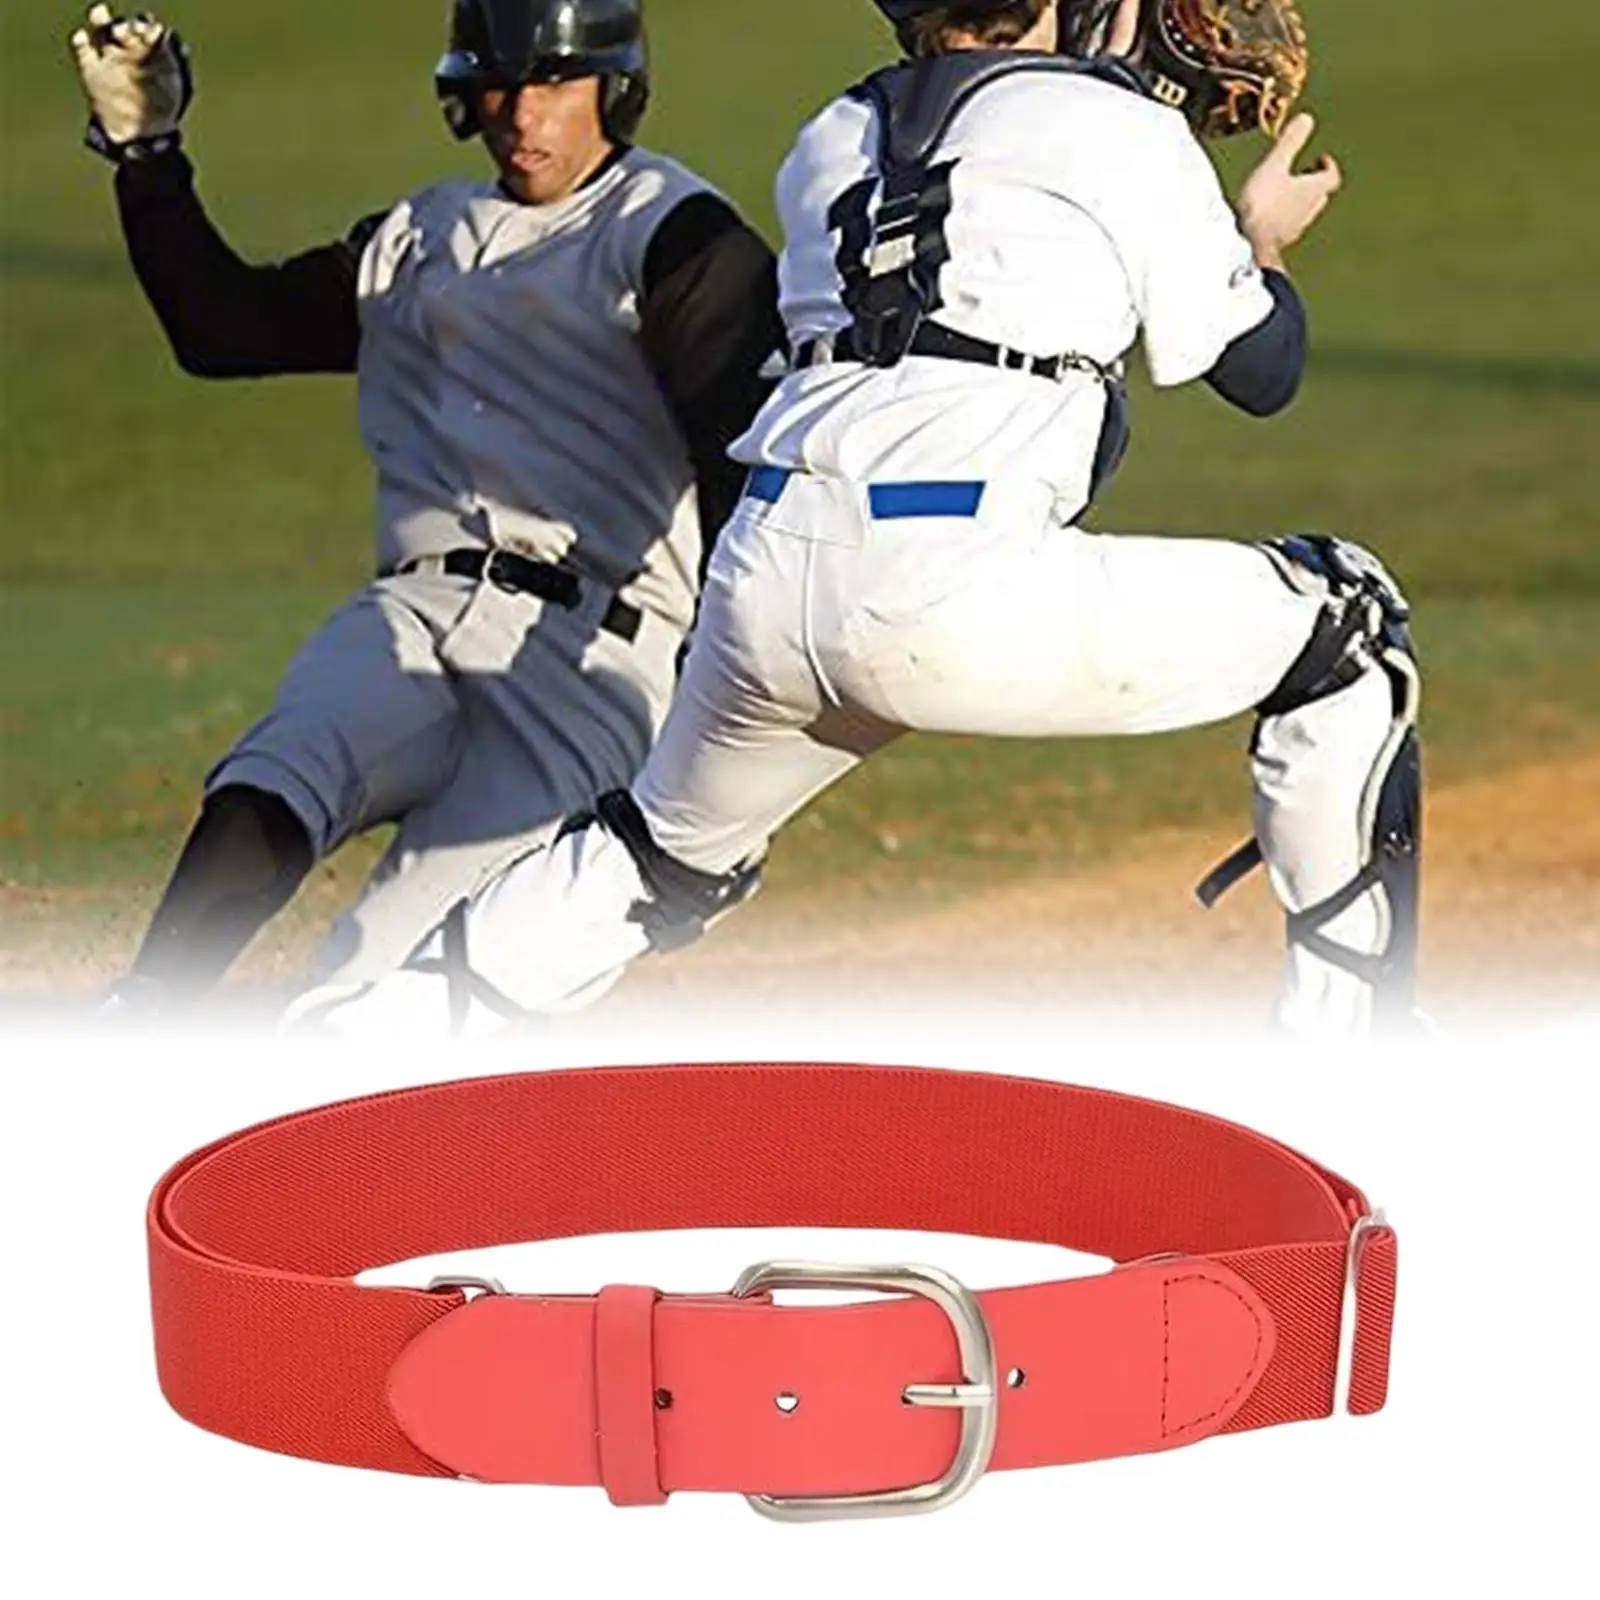 Baseball Belt Softball Belt Waist Belt Elastic Dry Cloth Clean ,Belt with Adjuster and Belt Holes Comfortable to Wear